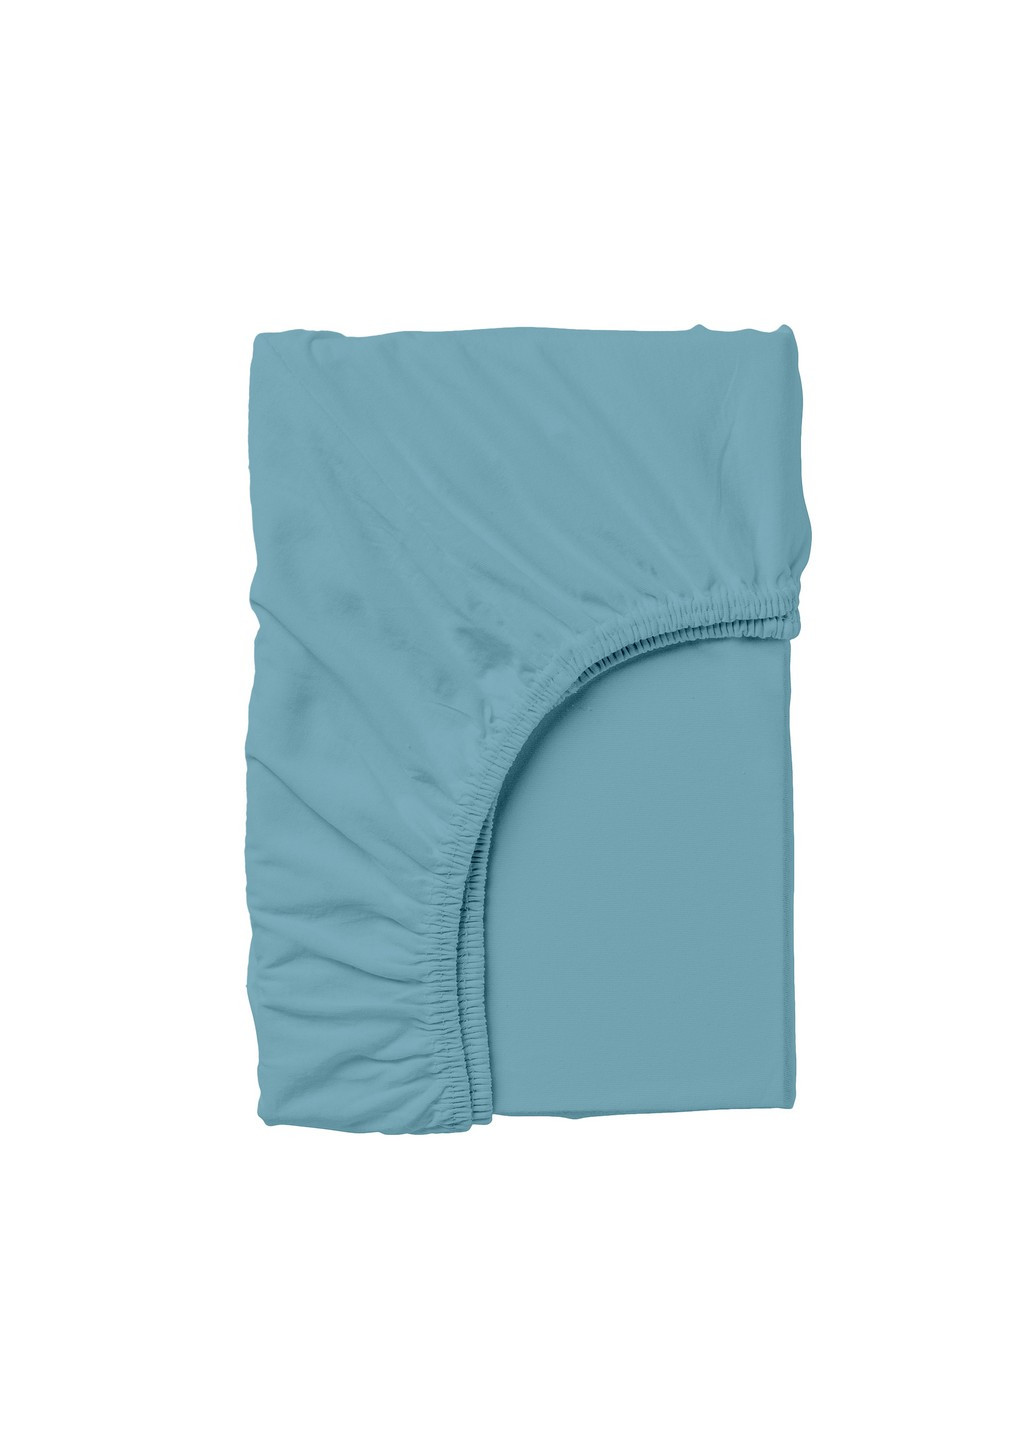 Комплект дитячої постільної білизни COLOR BLOTS SKY Cosas (251110856)